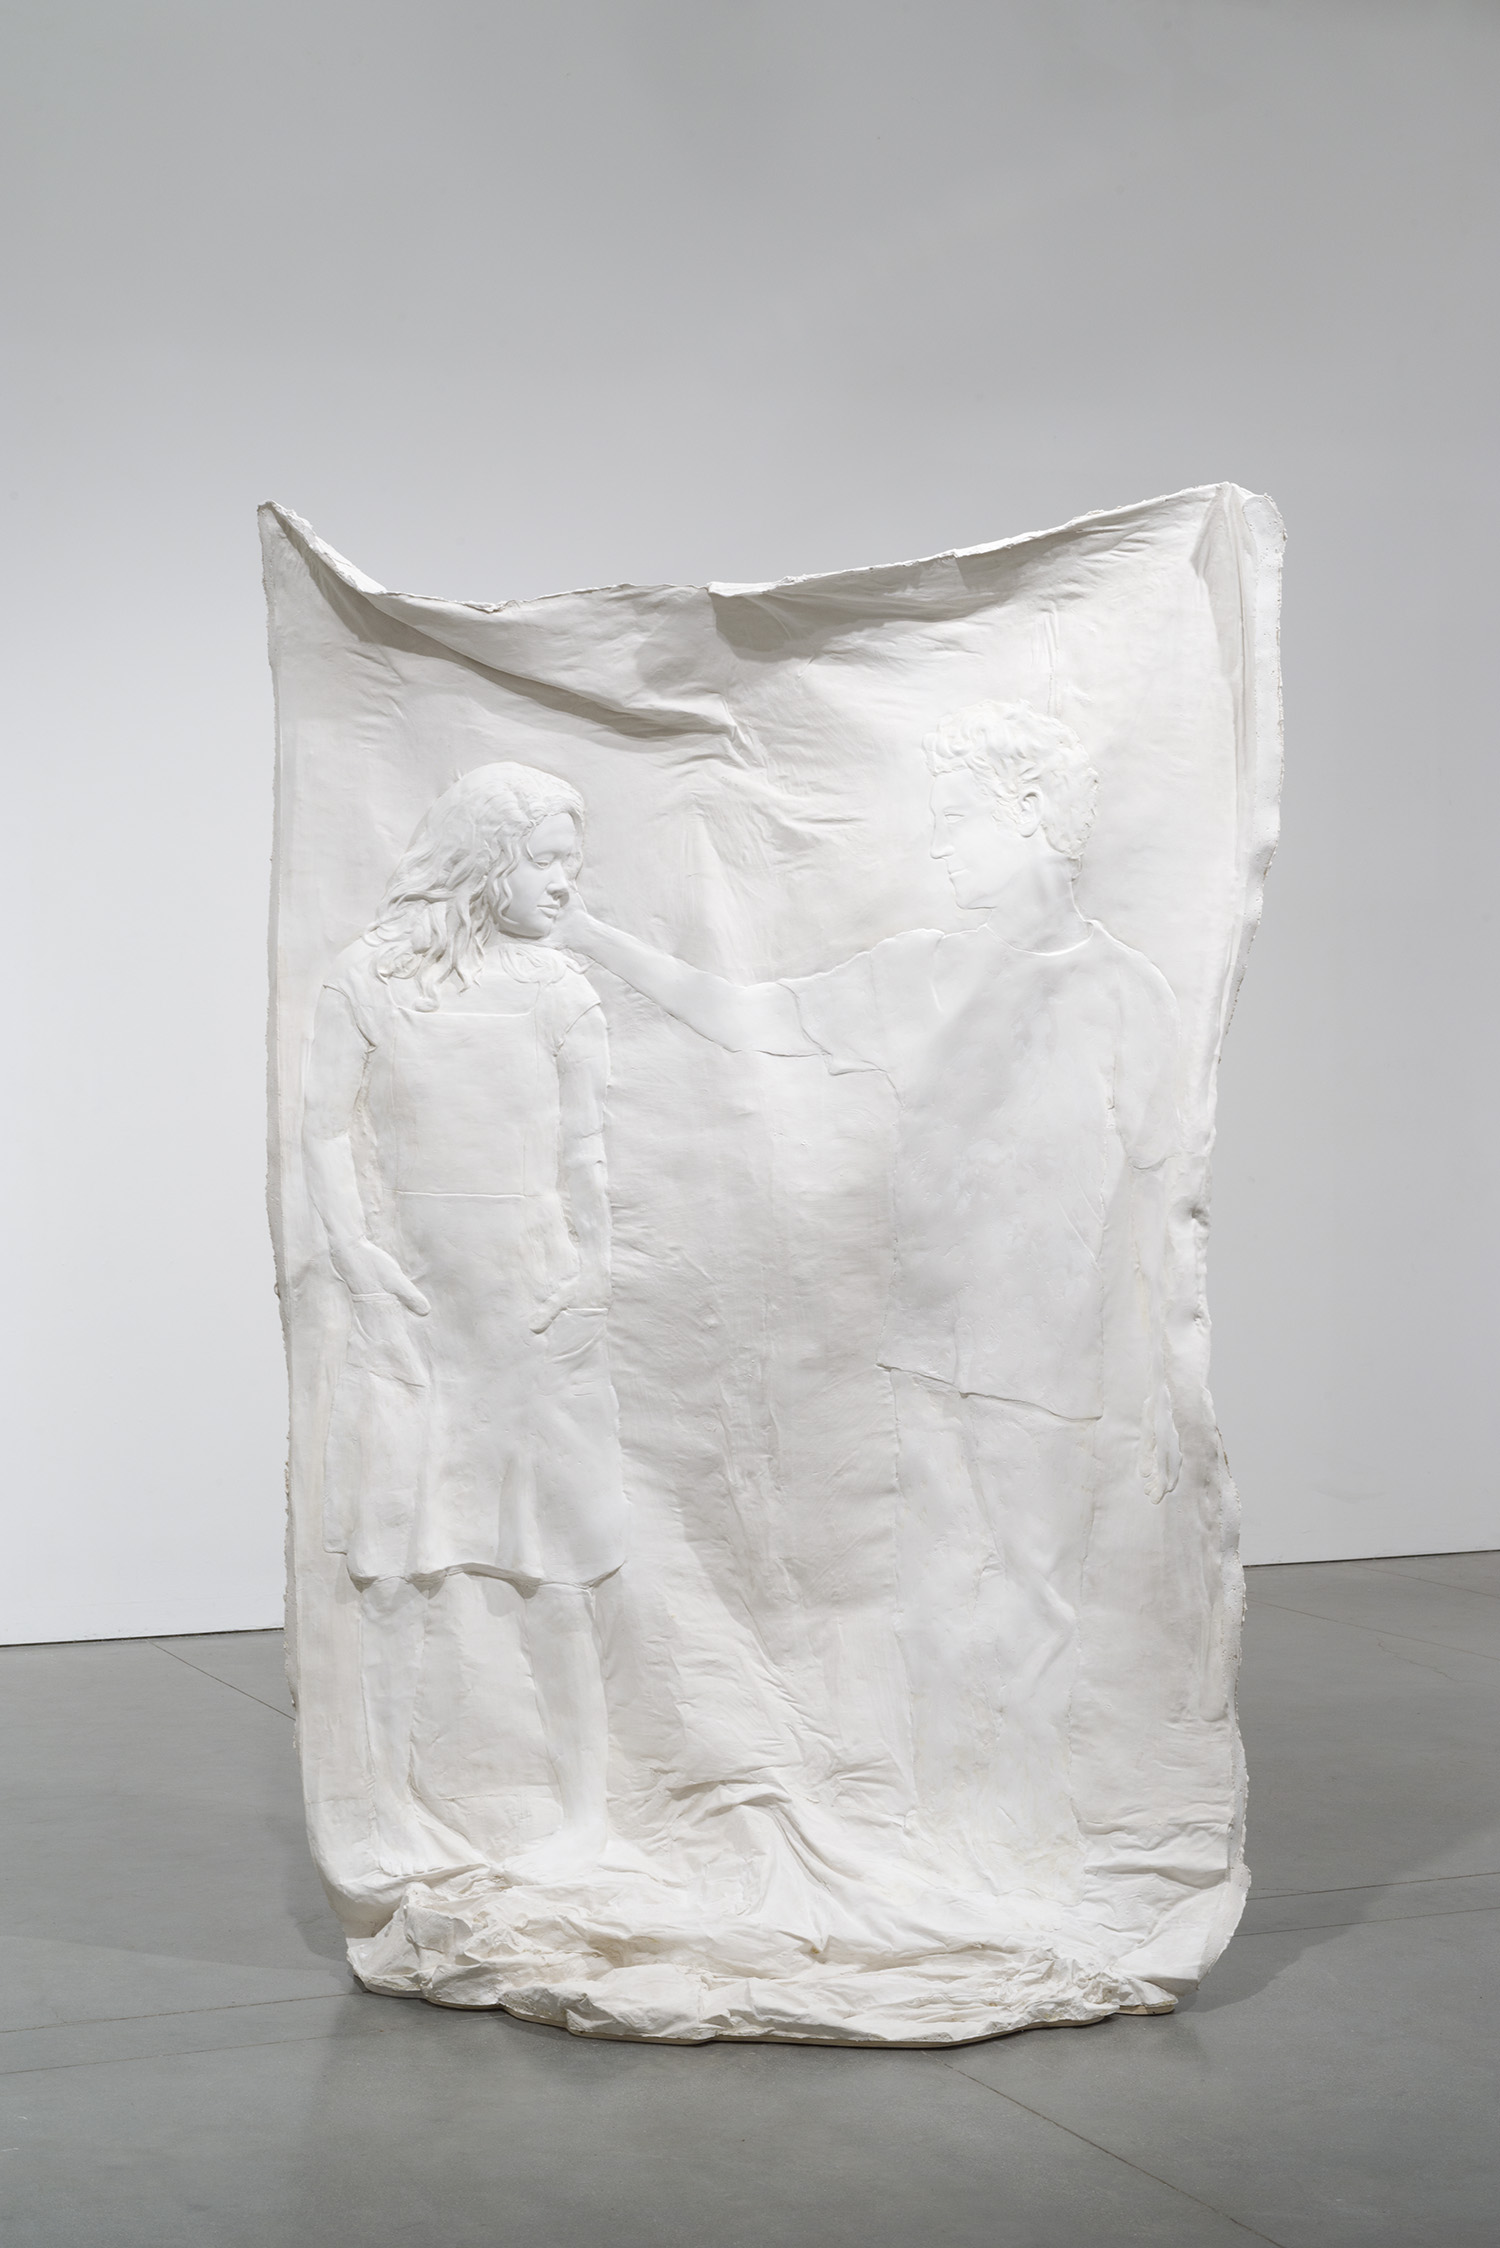   Untitled , 2014 Gypsum cement, fiberglass cloth, wood 90 x 60 x 24 inches 